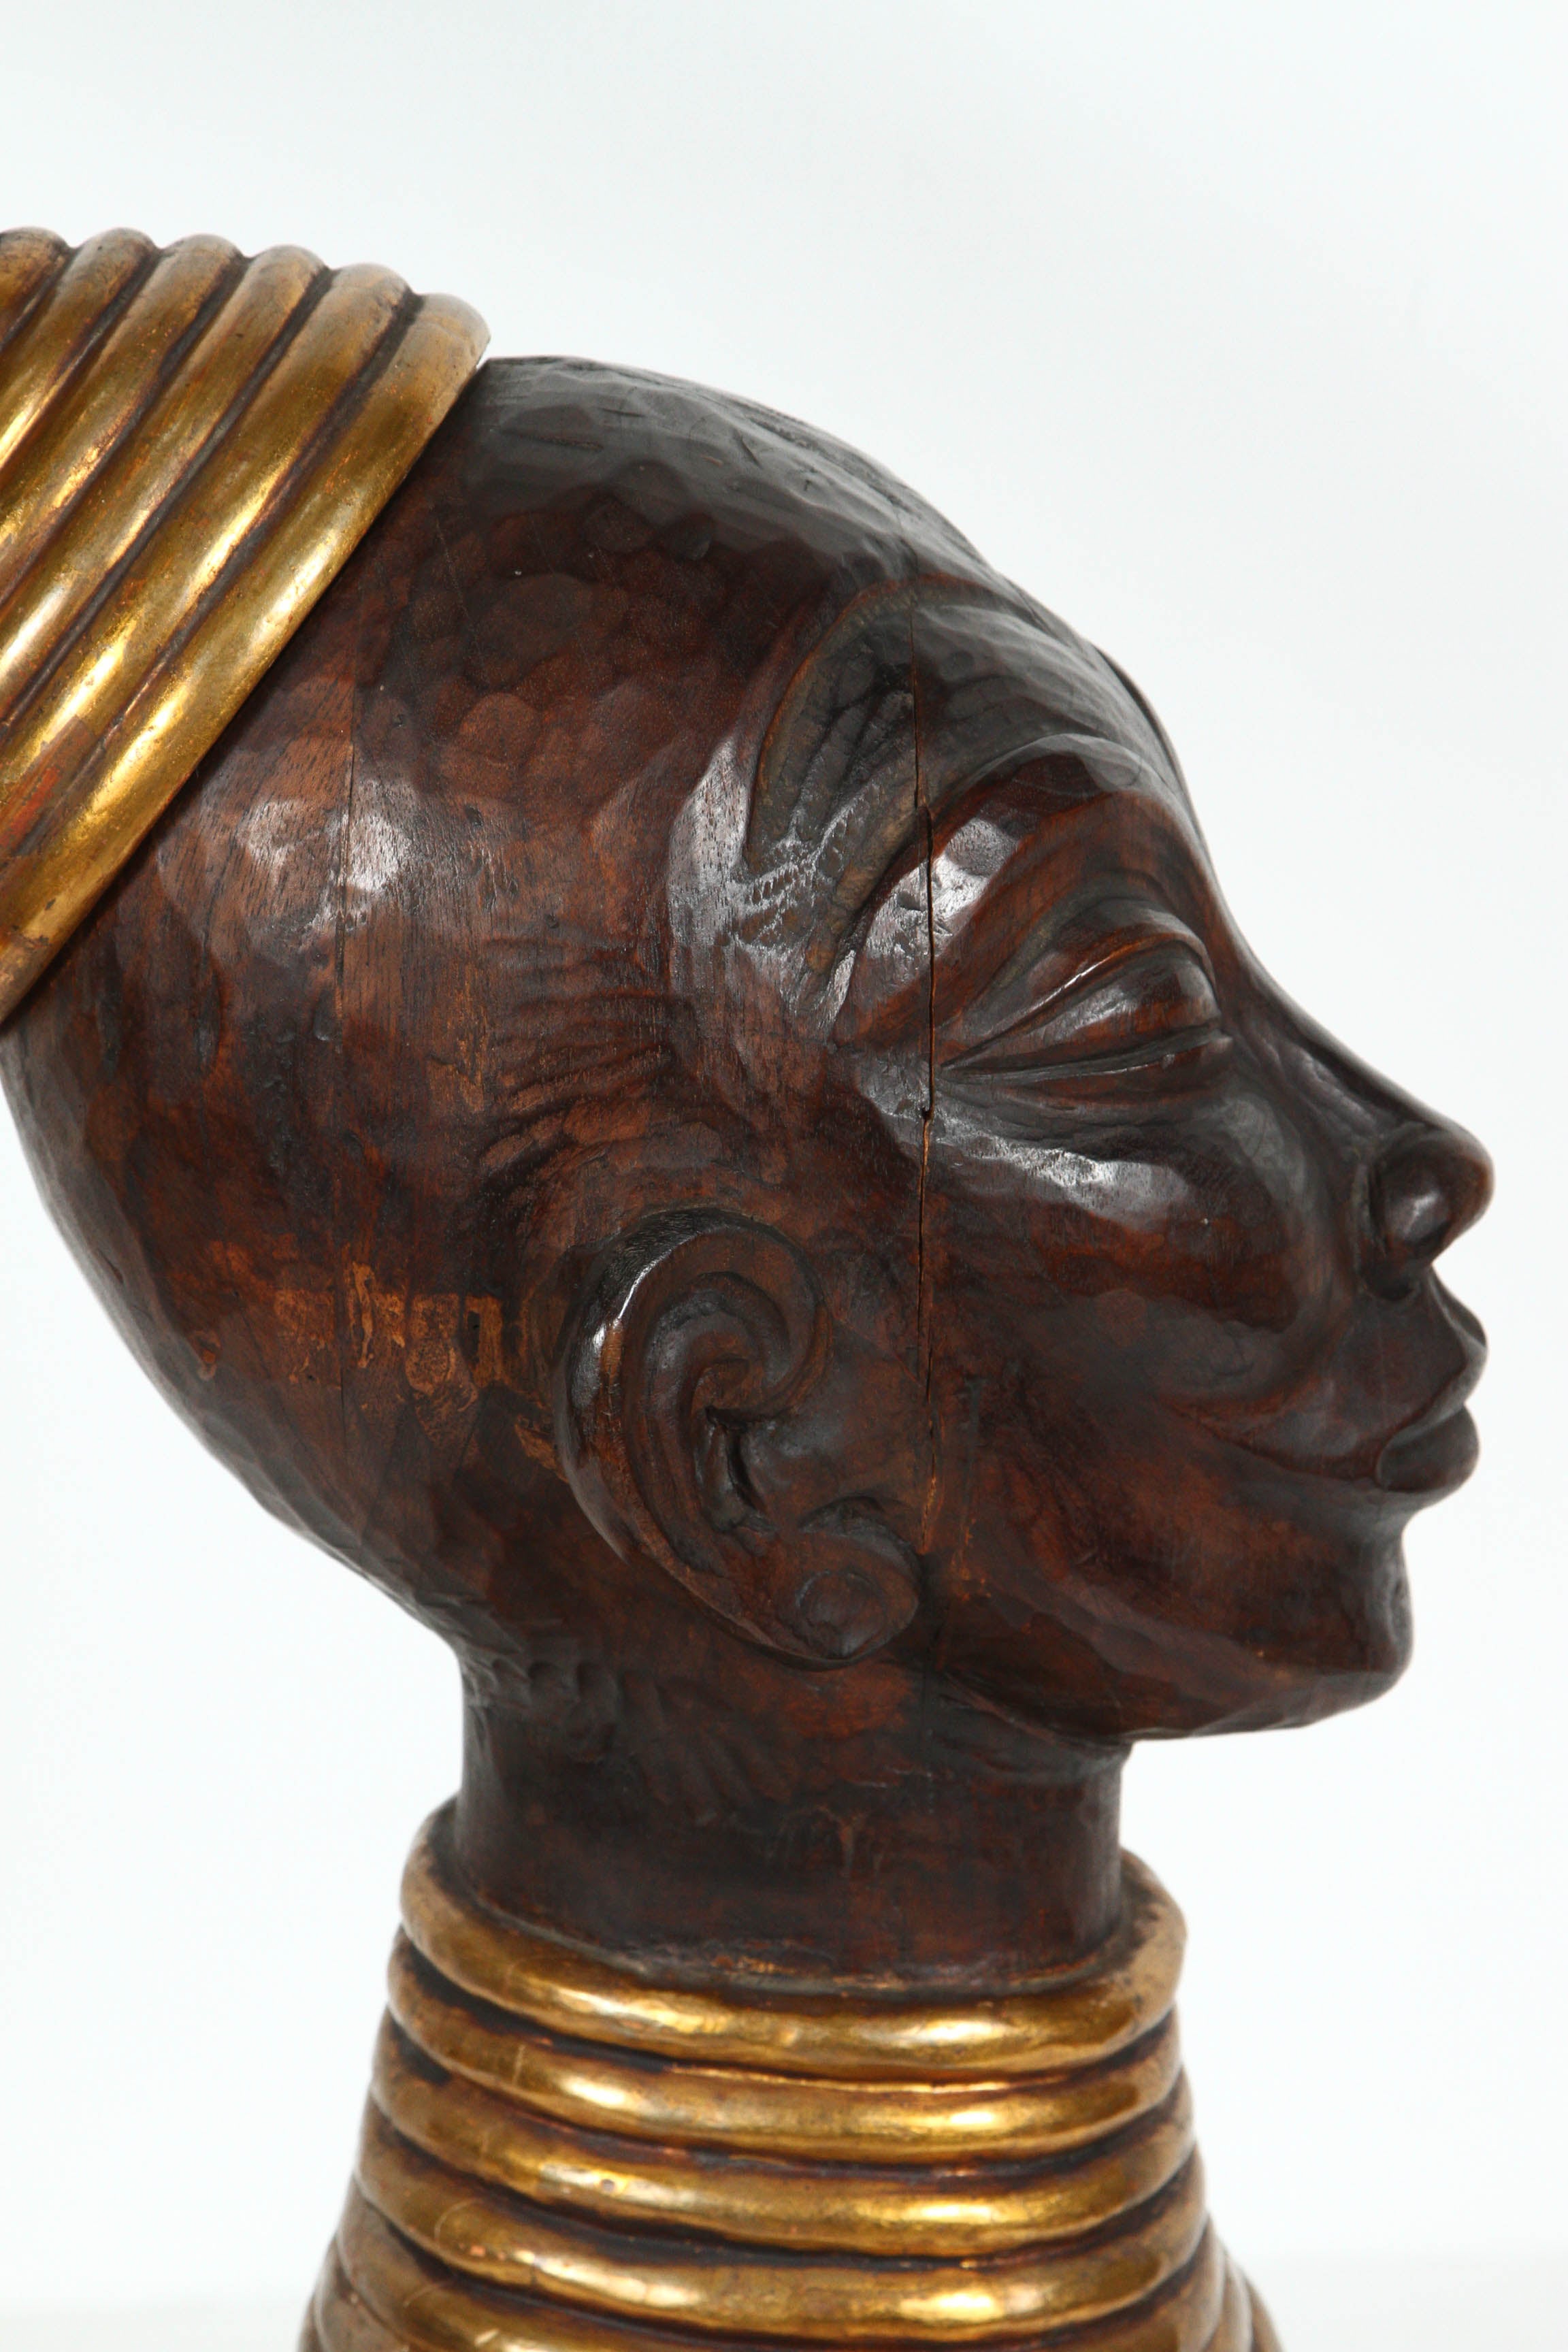 South African Zulu Wooden Tribal Contemporary Sculpture of Black African Queen